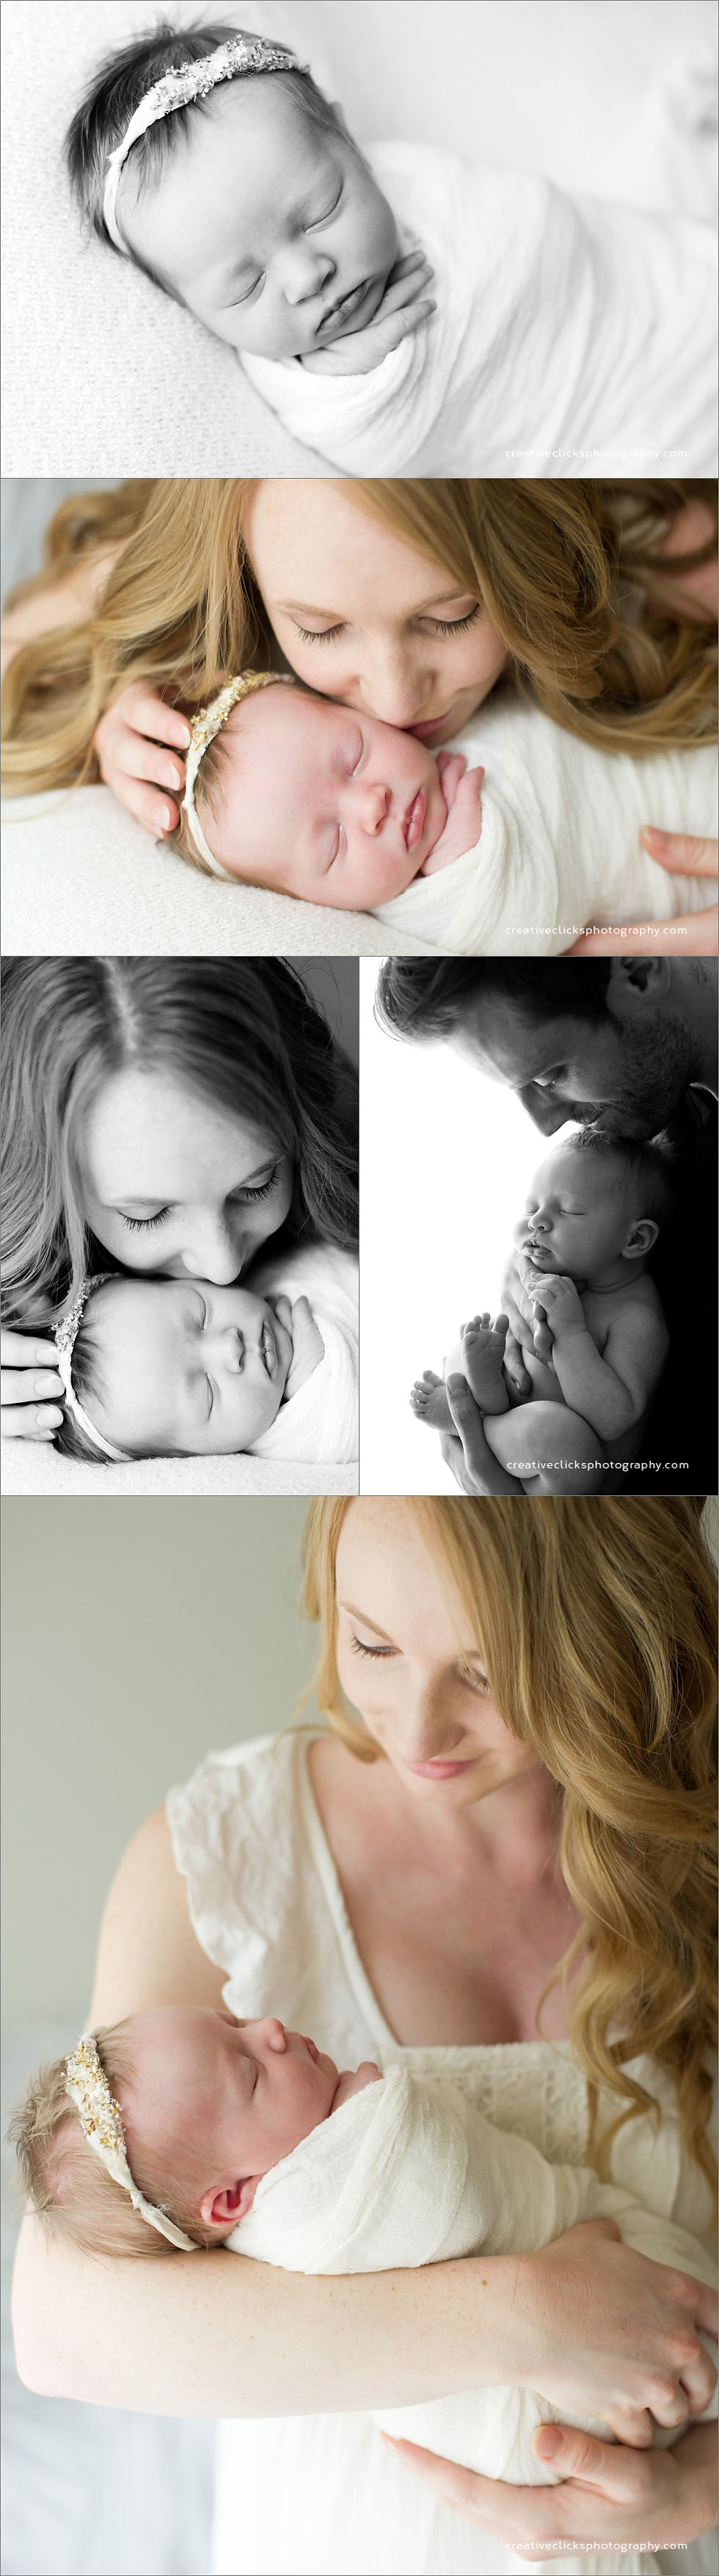 stunning newborn and parent baby photos in niagara ontario photography studio